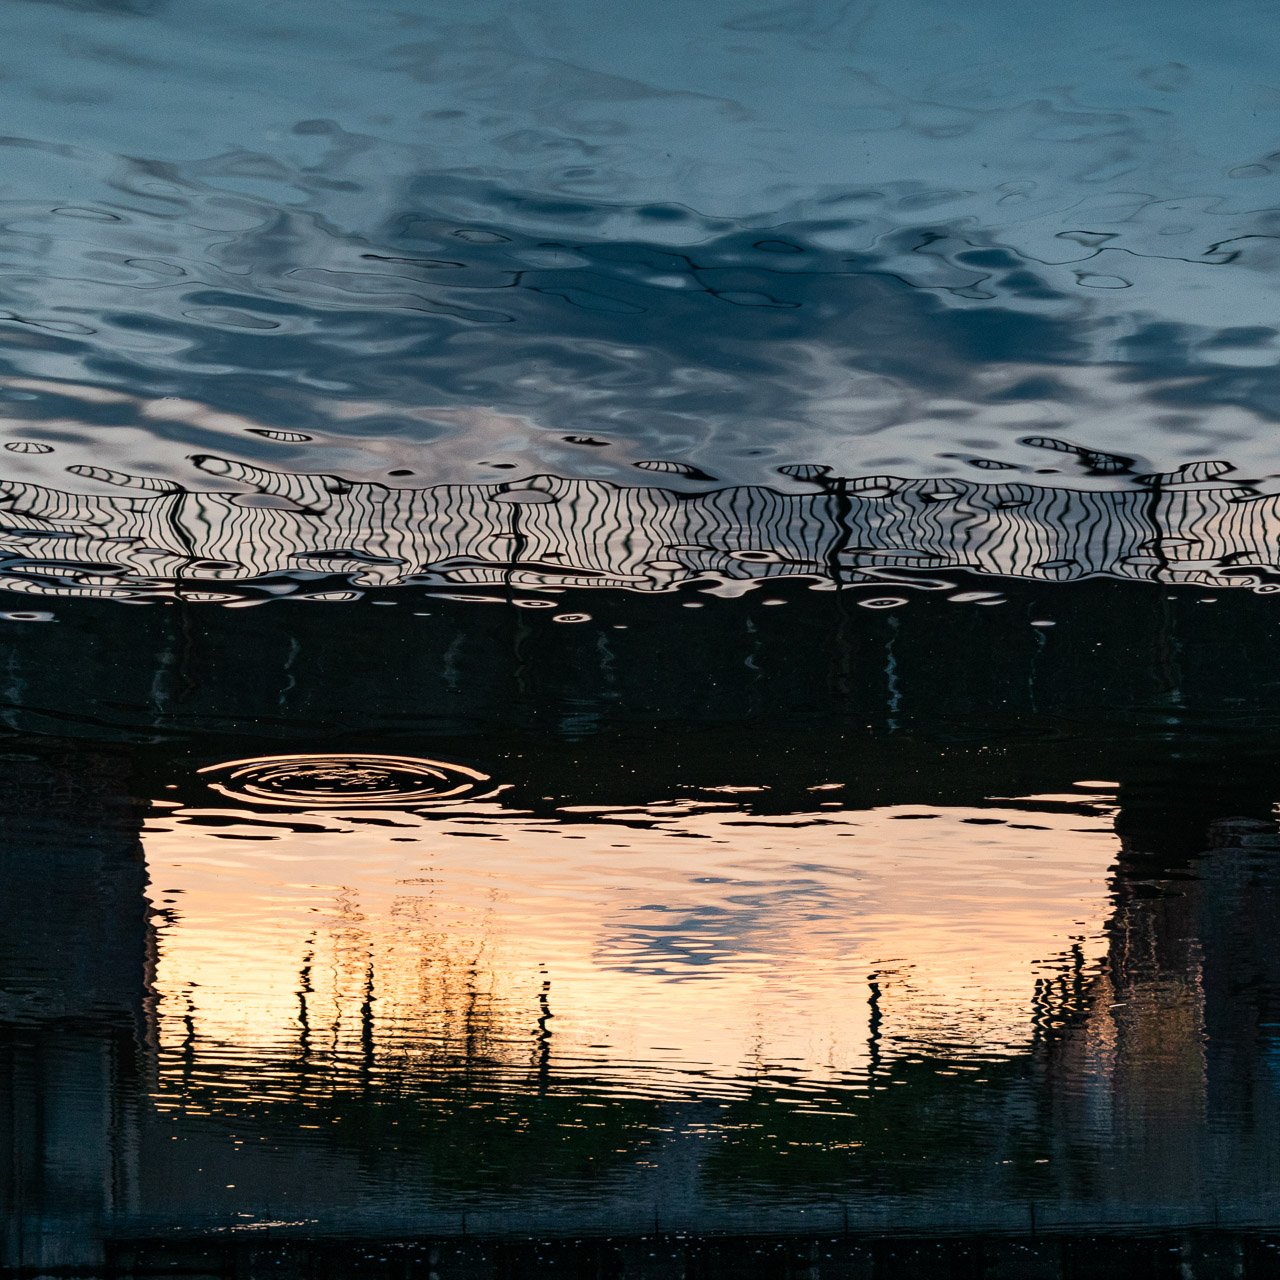 reflections-13.jpg